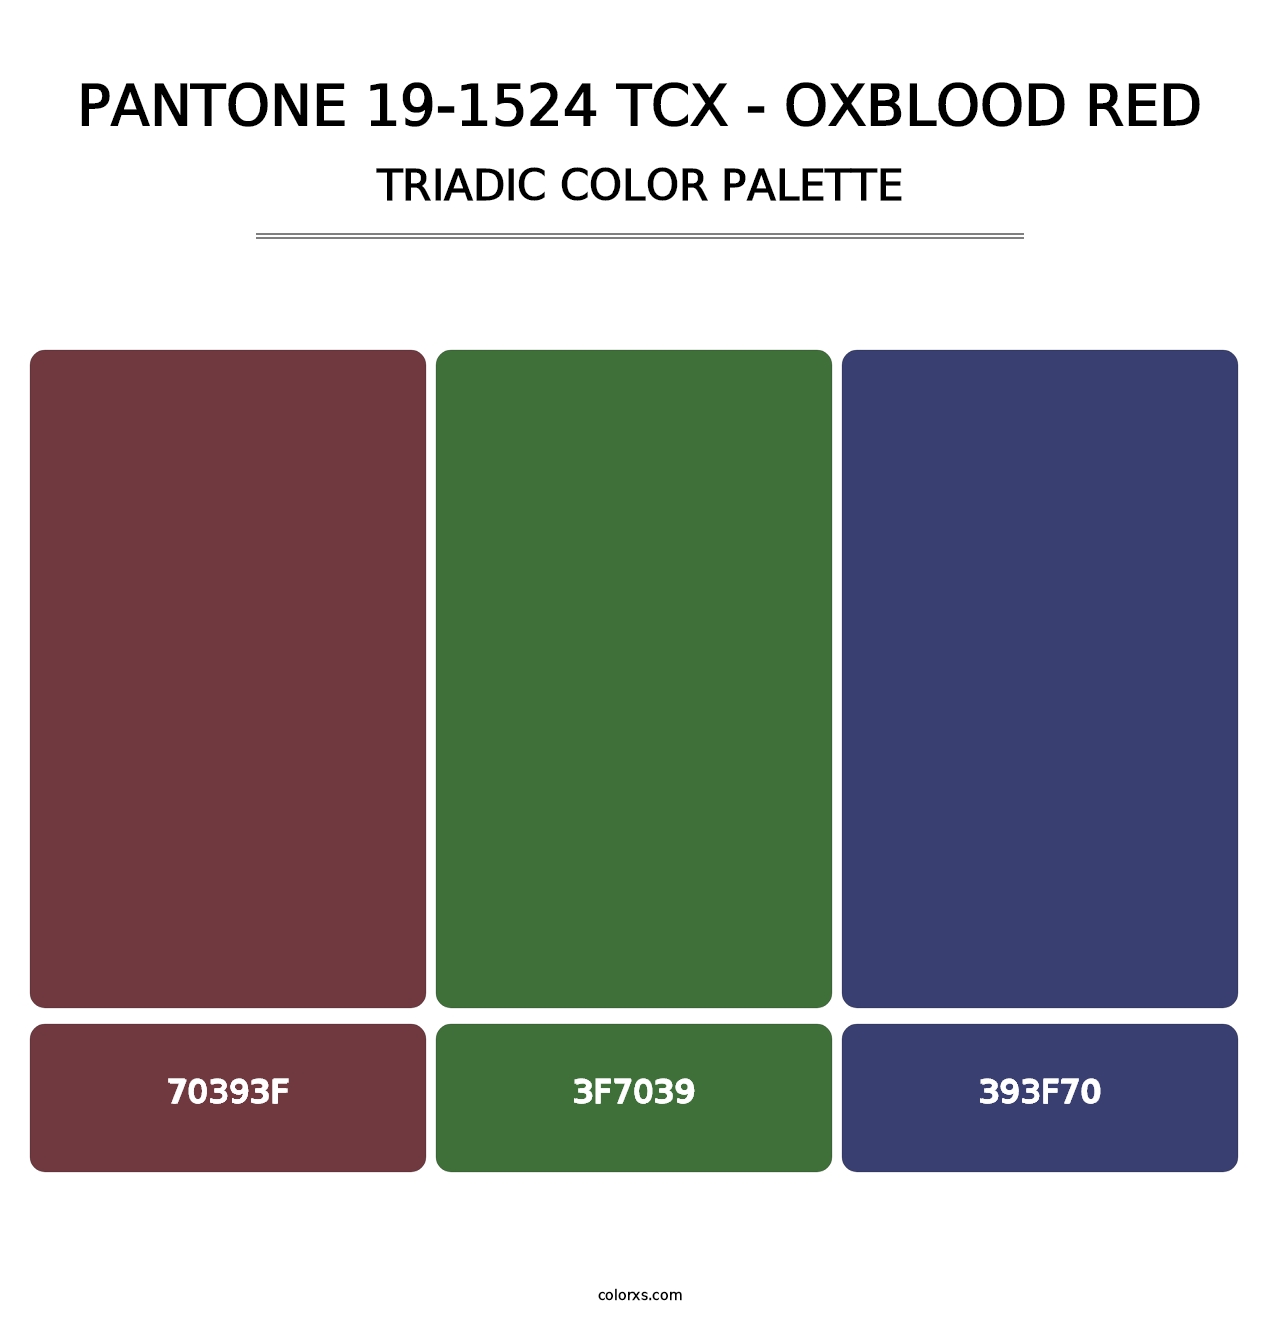 PANTONE 19-1524 TCX - Oxblood Red - Triadic Color Palette